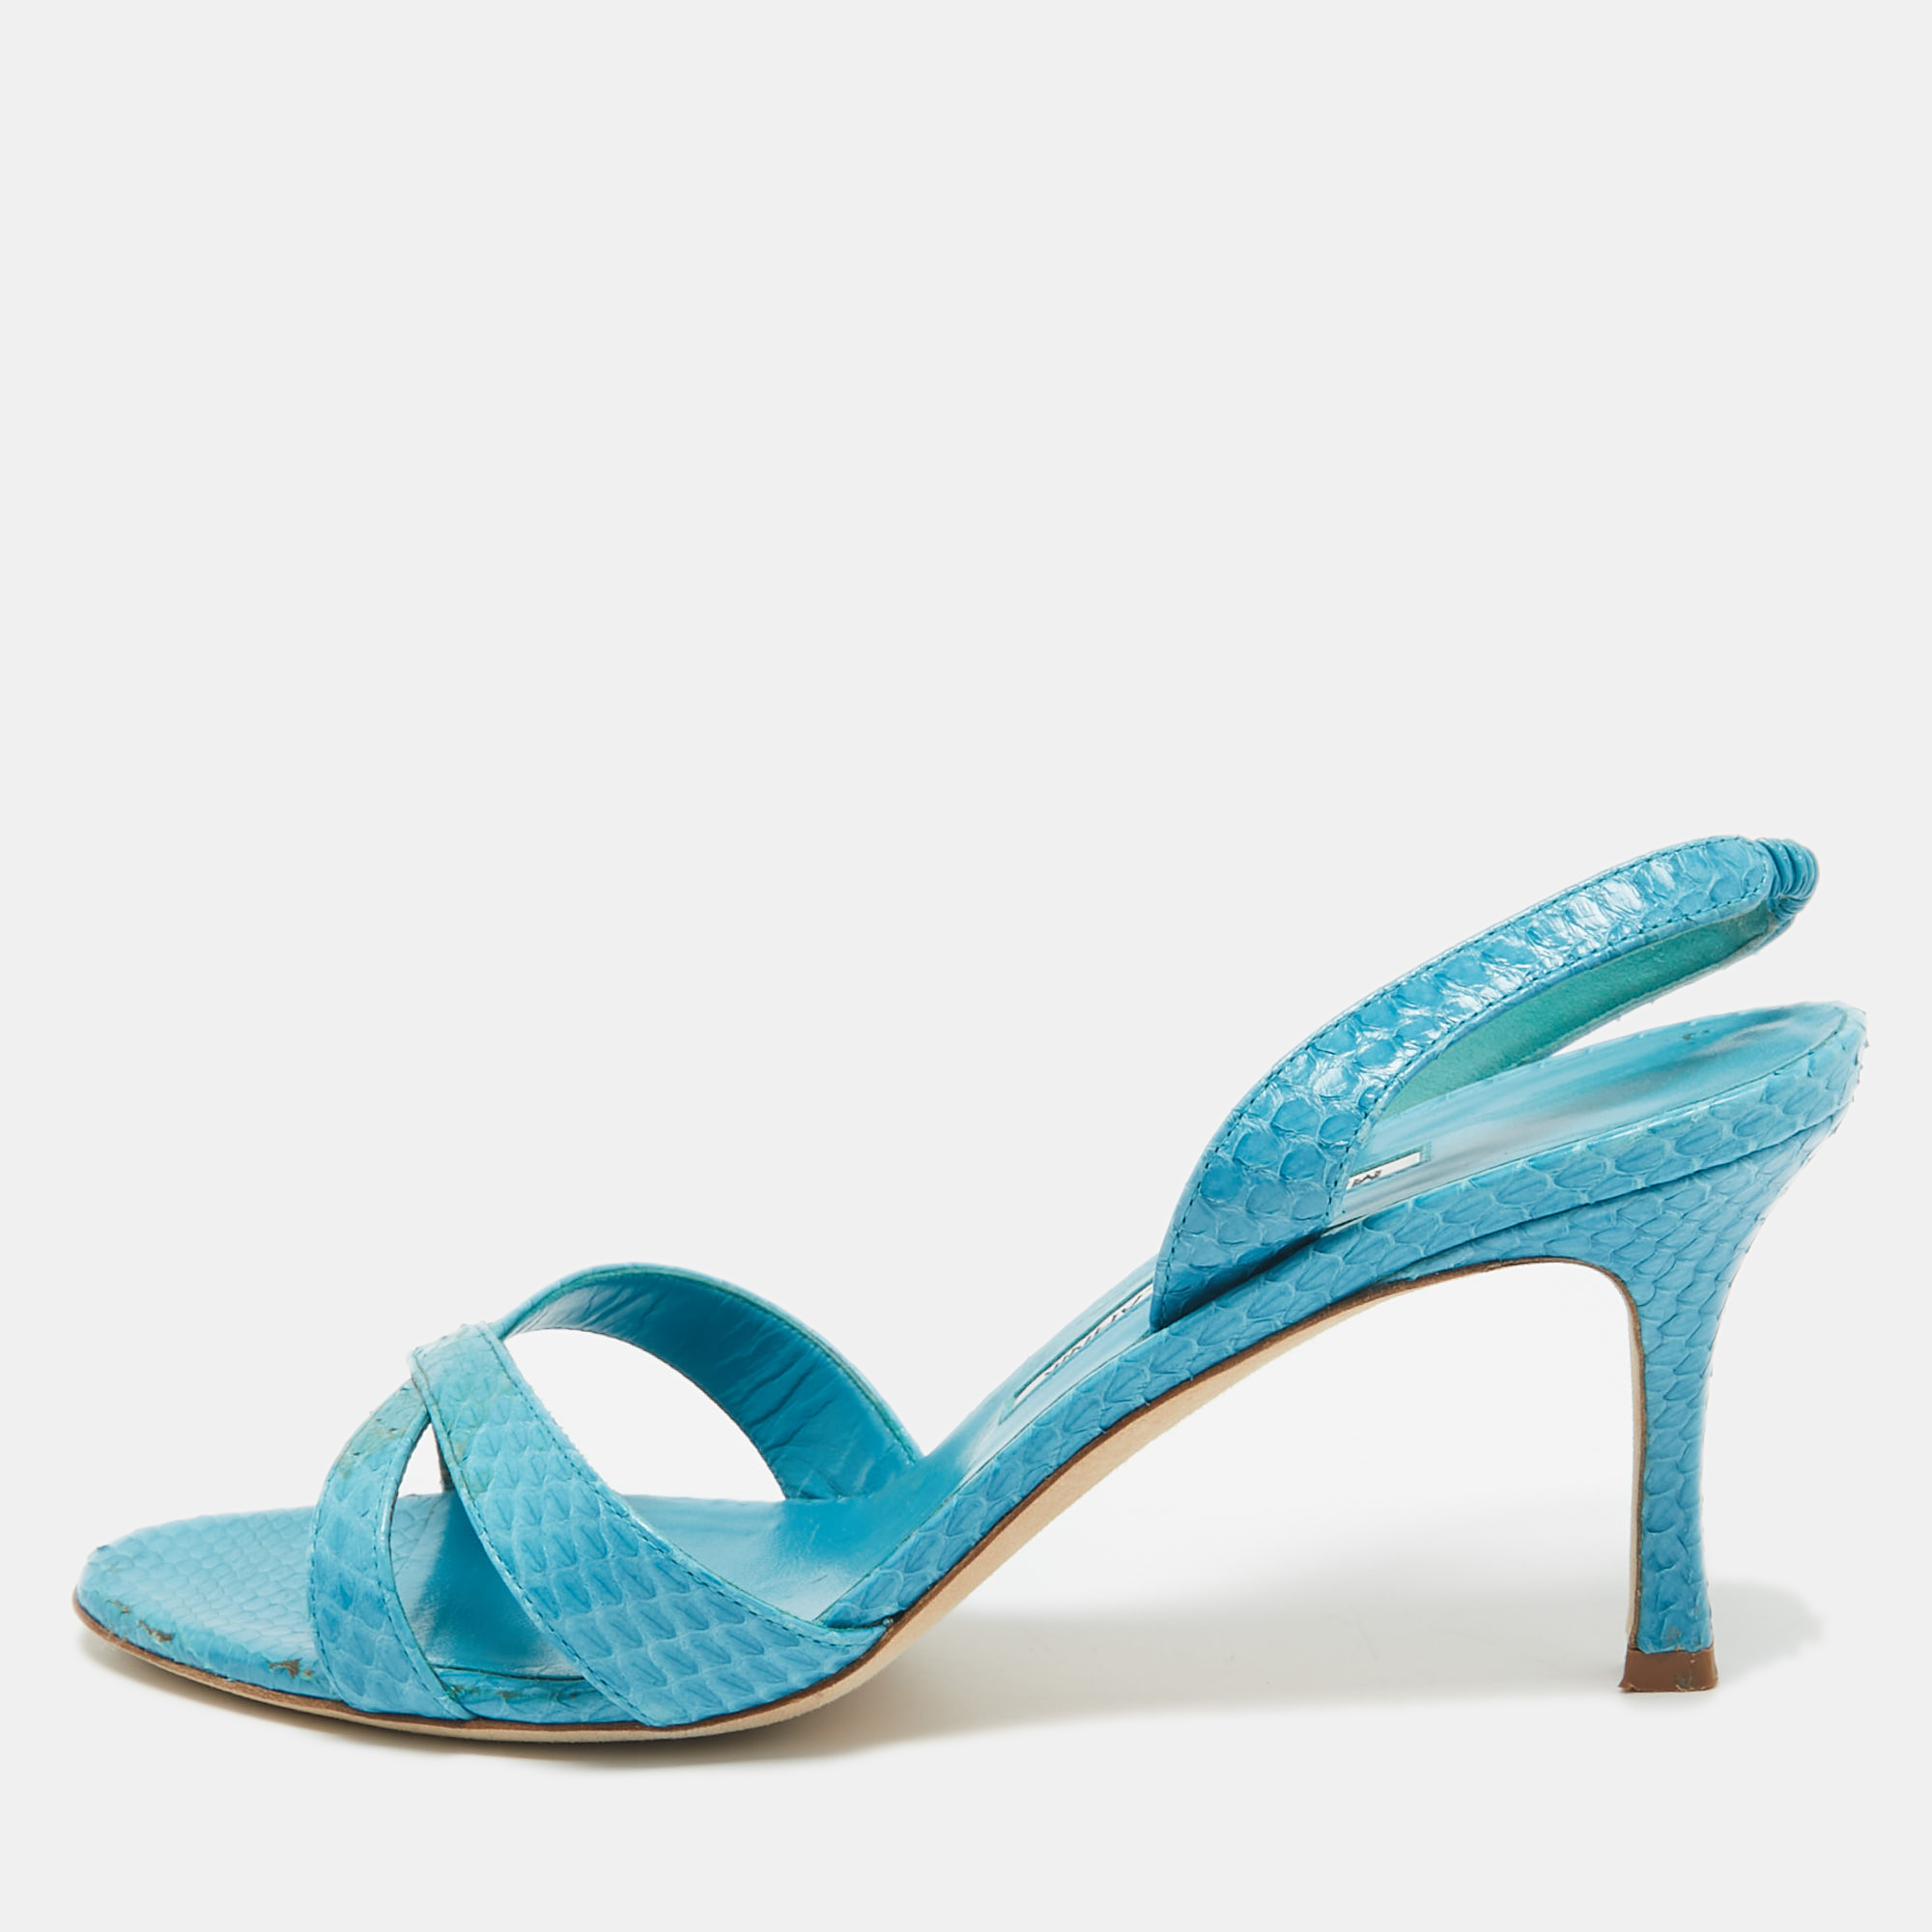 Manolo blahnik blue python slingback sandals size 39.5